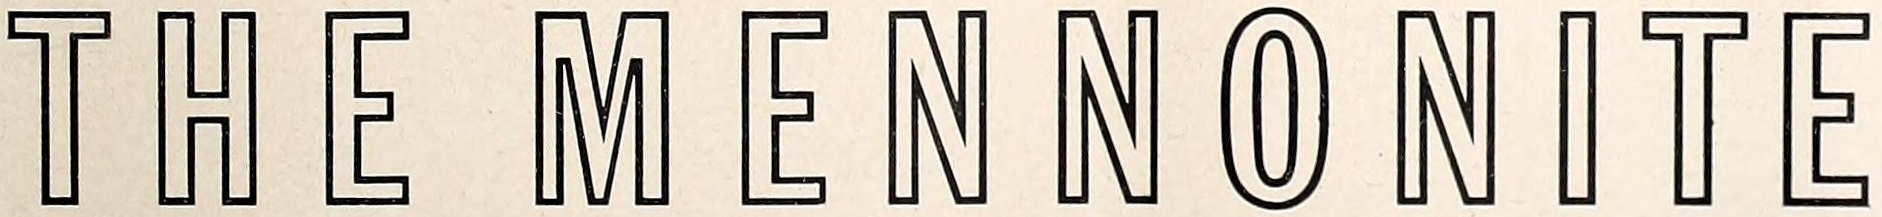 “The Mennonite” logo, circa 1963